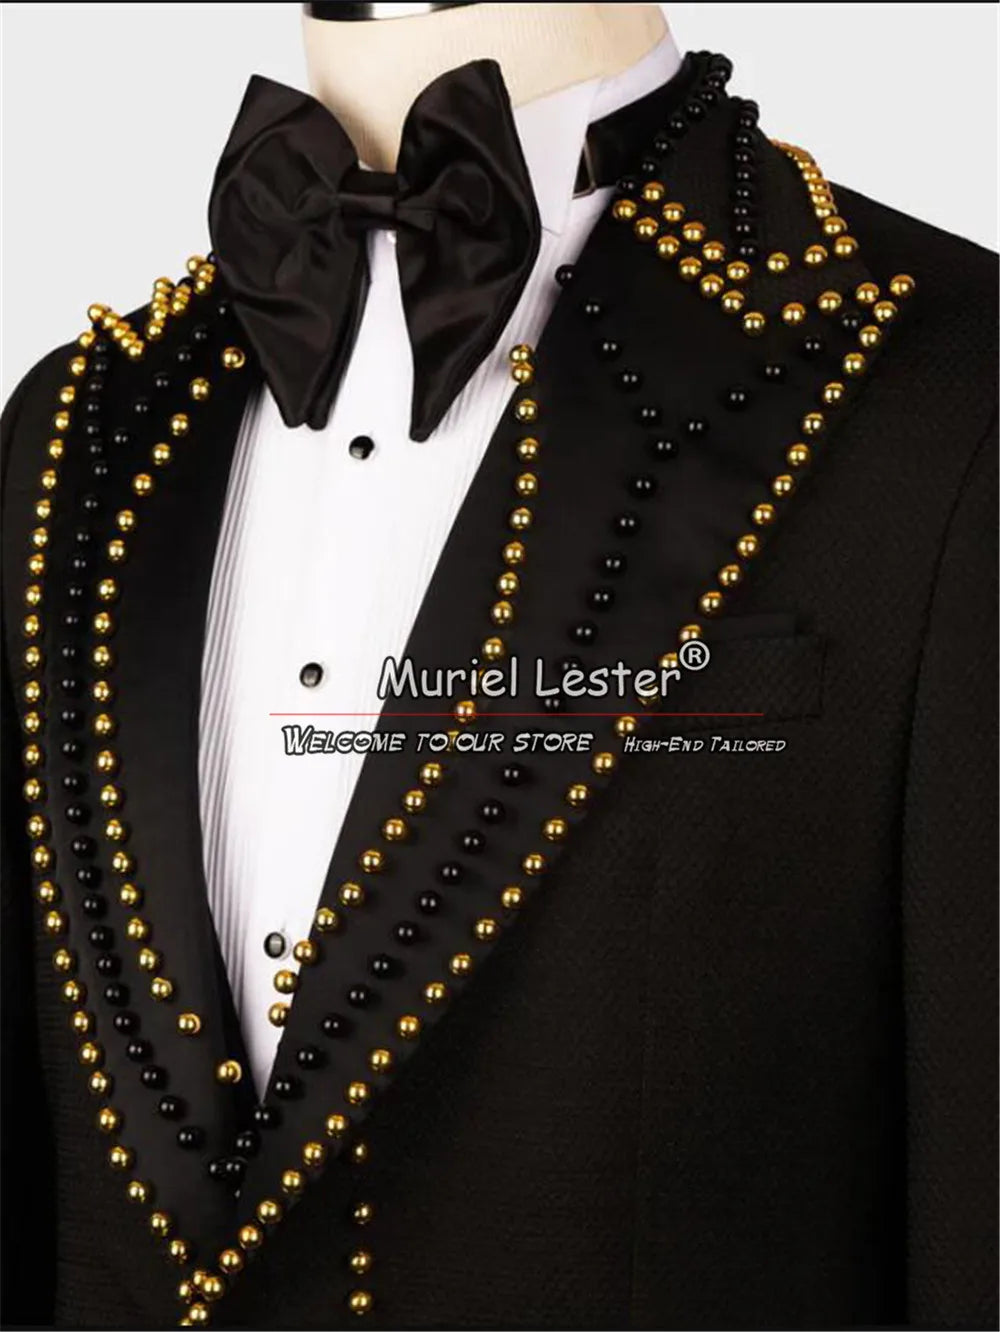 Formal Man Suit Jackets Gold/Black Pearls Handmade Prom Blazer Sets Banquet Dinner Party Wedding Groom Tuxedos Custom Made 1 Pcs